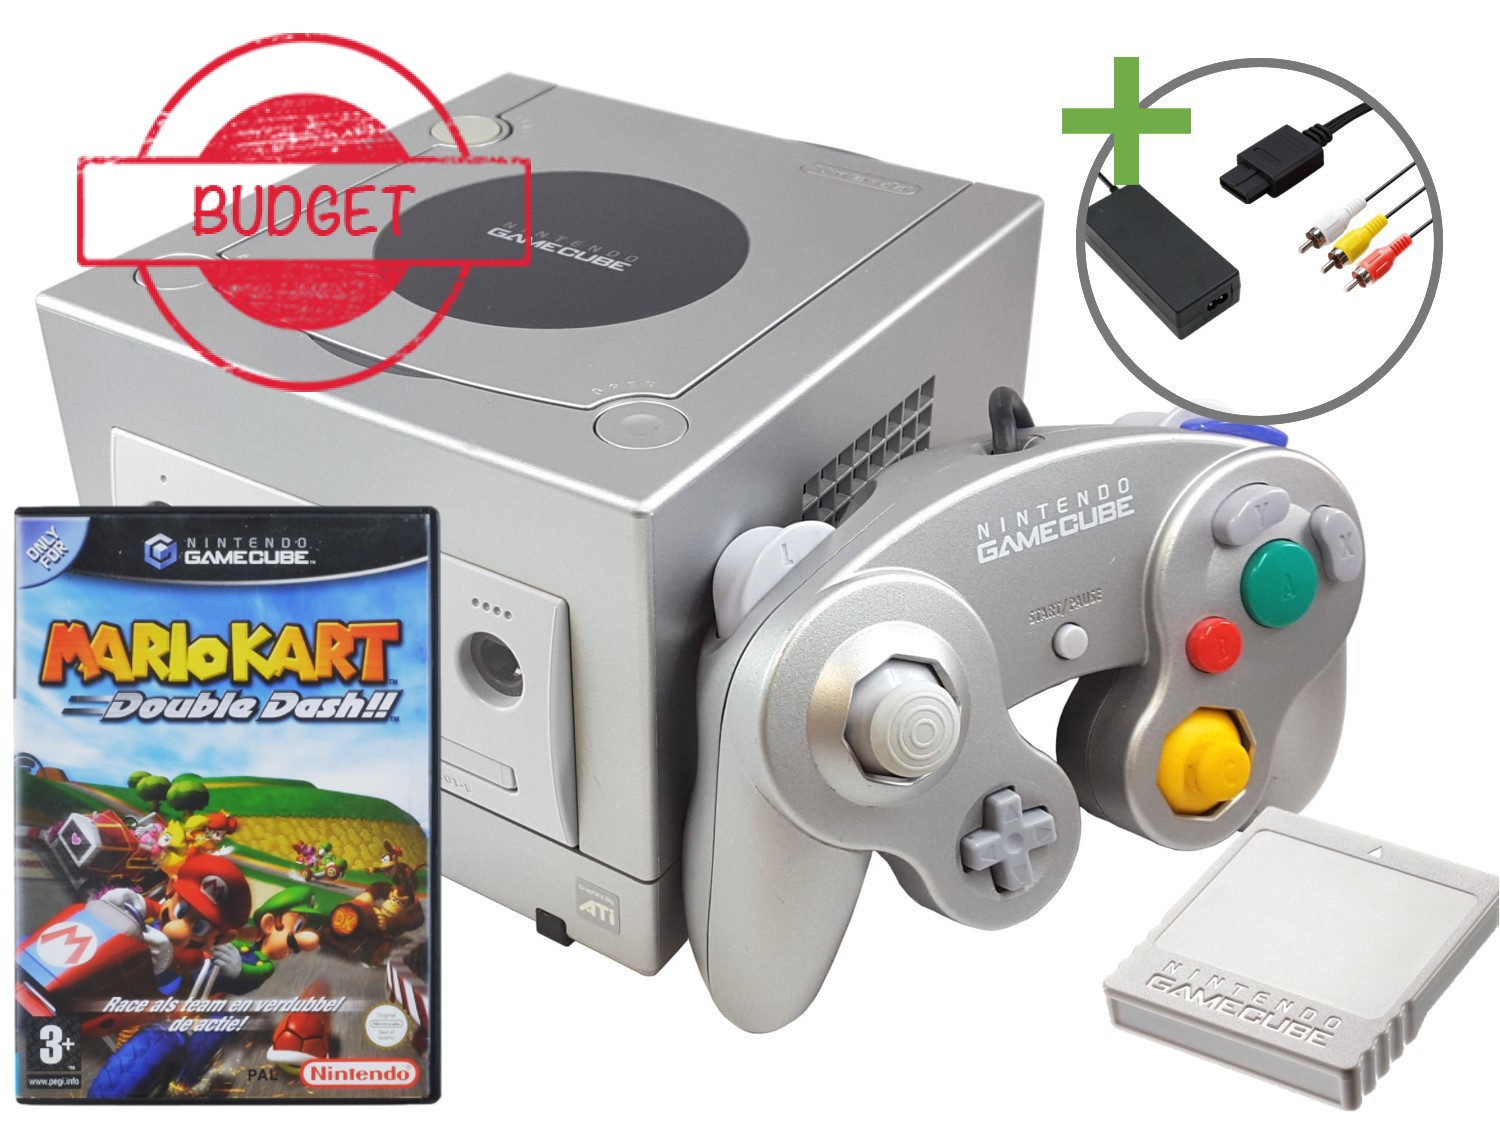 Nintendo Gamecube Starter Pack - Mario Kart Double Dash Edition - Budget Kopen | Gamecube Hardware